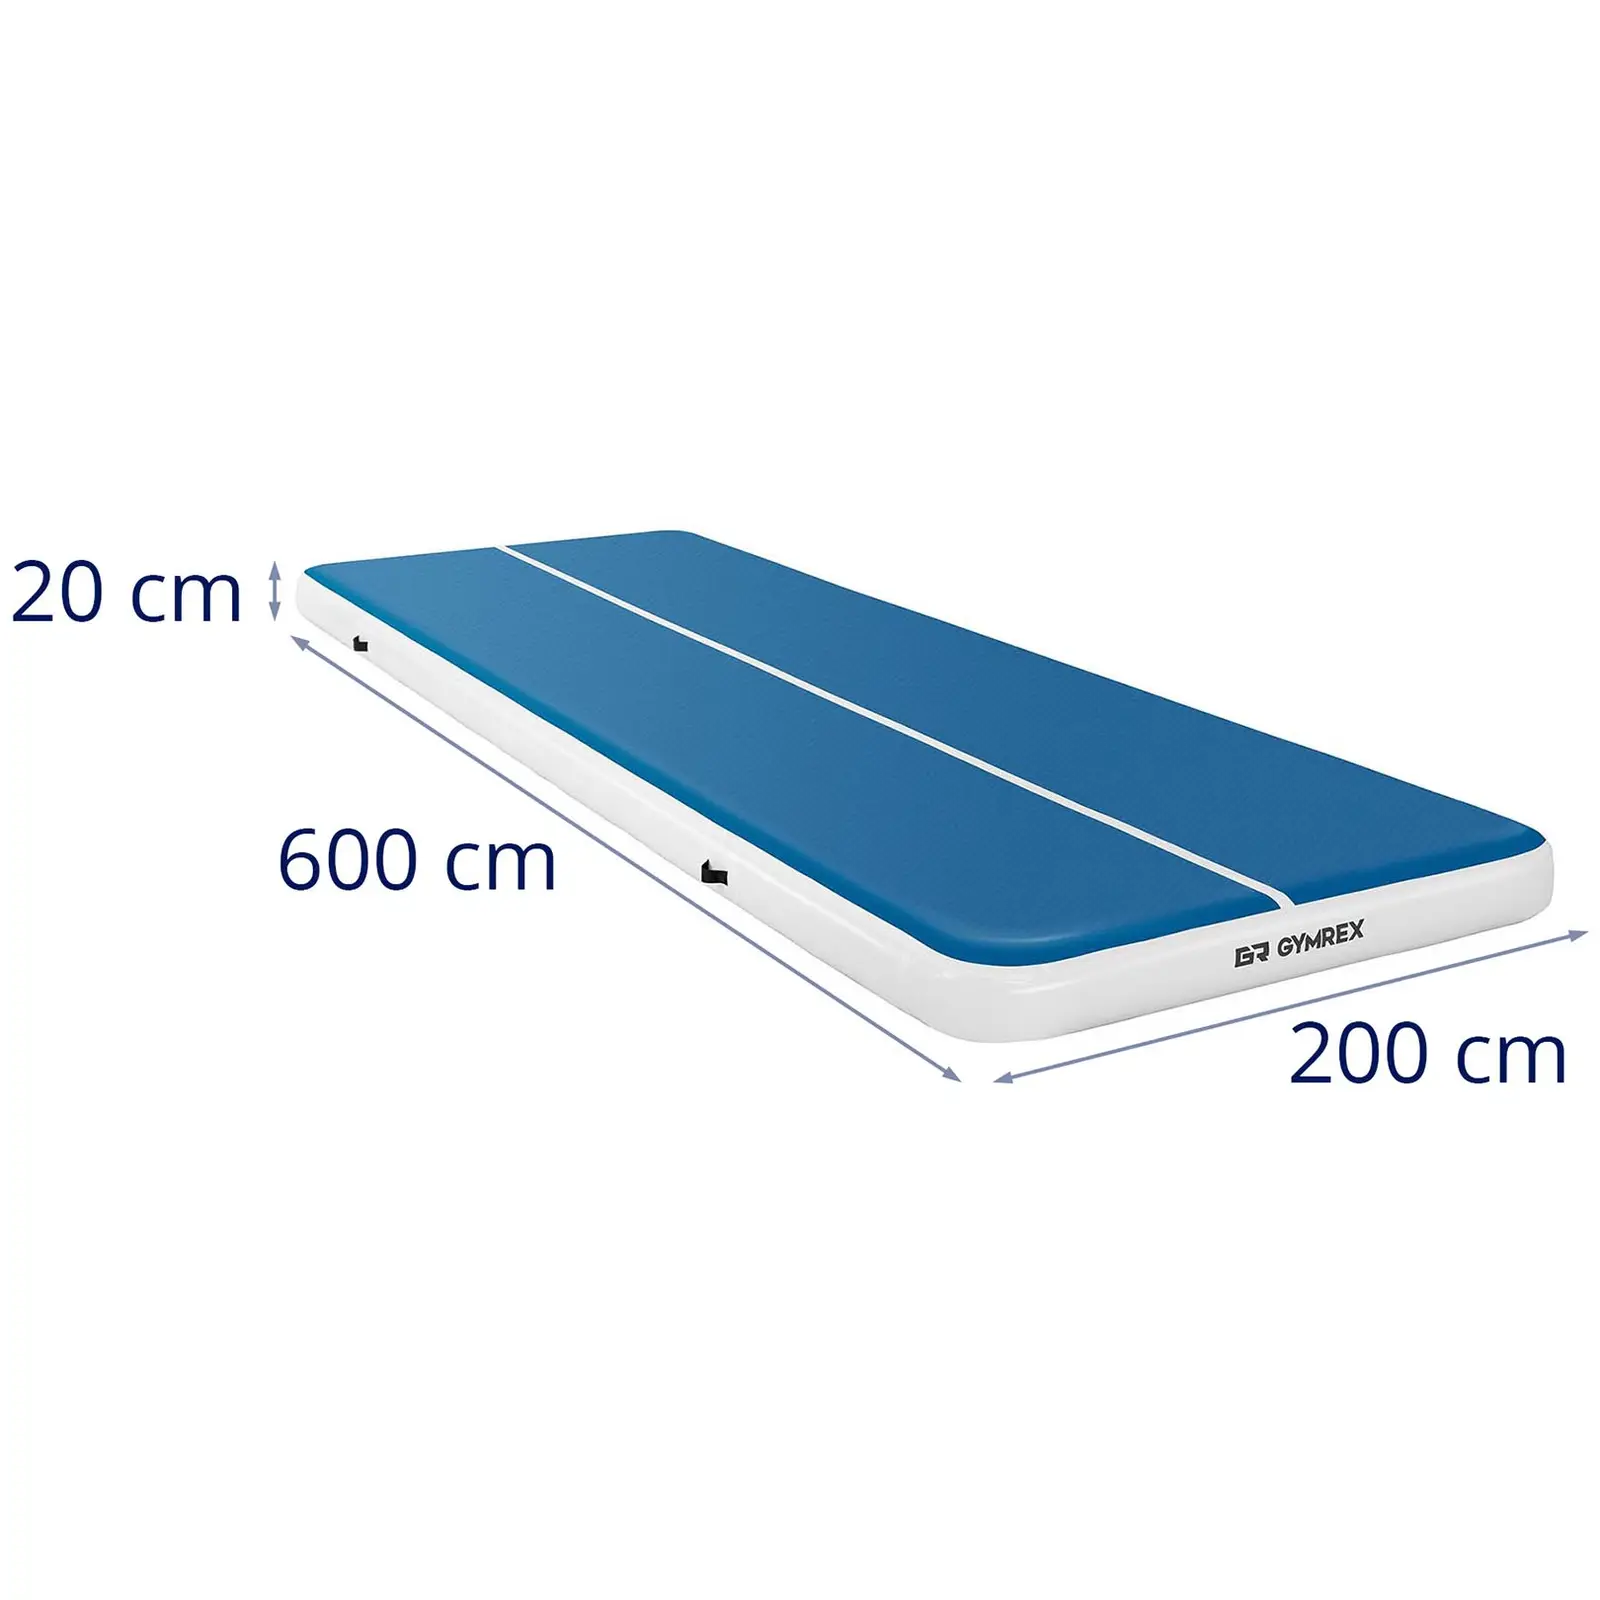 Set Aufblasbare Turnmatte inklusive Luftpumpe - 600 x 200 x 20 cm - 400 kg - blau/weiß